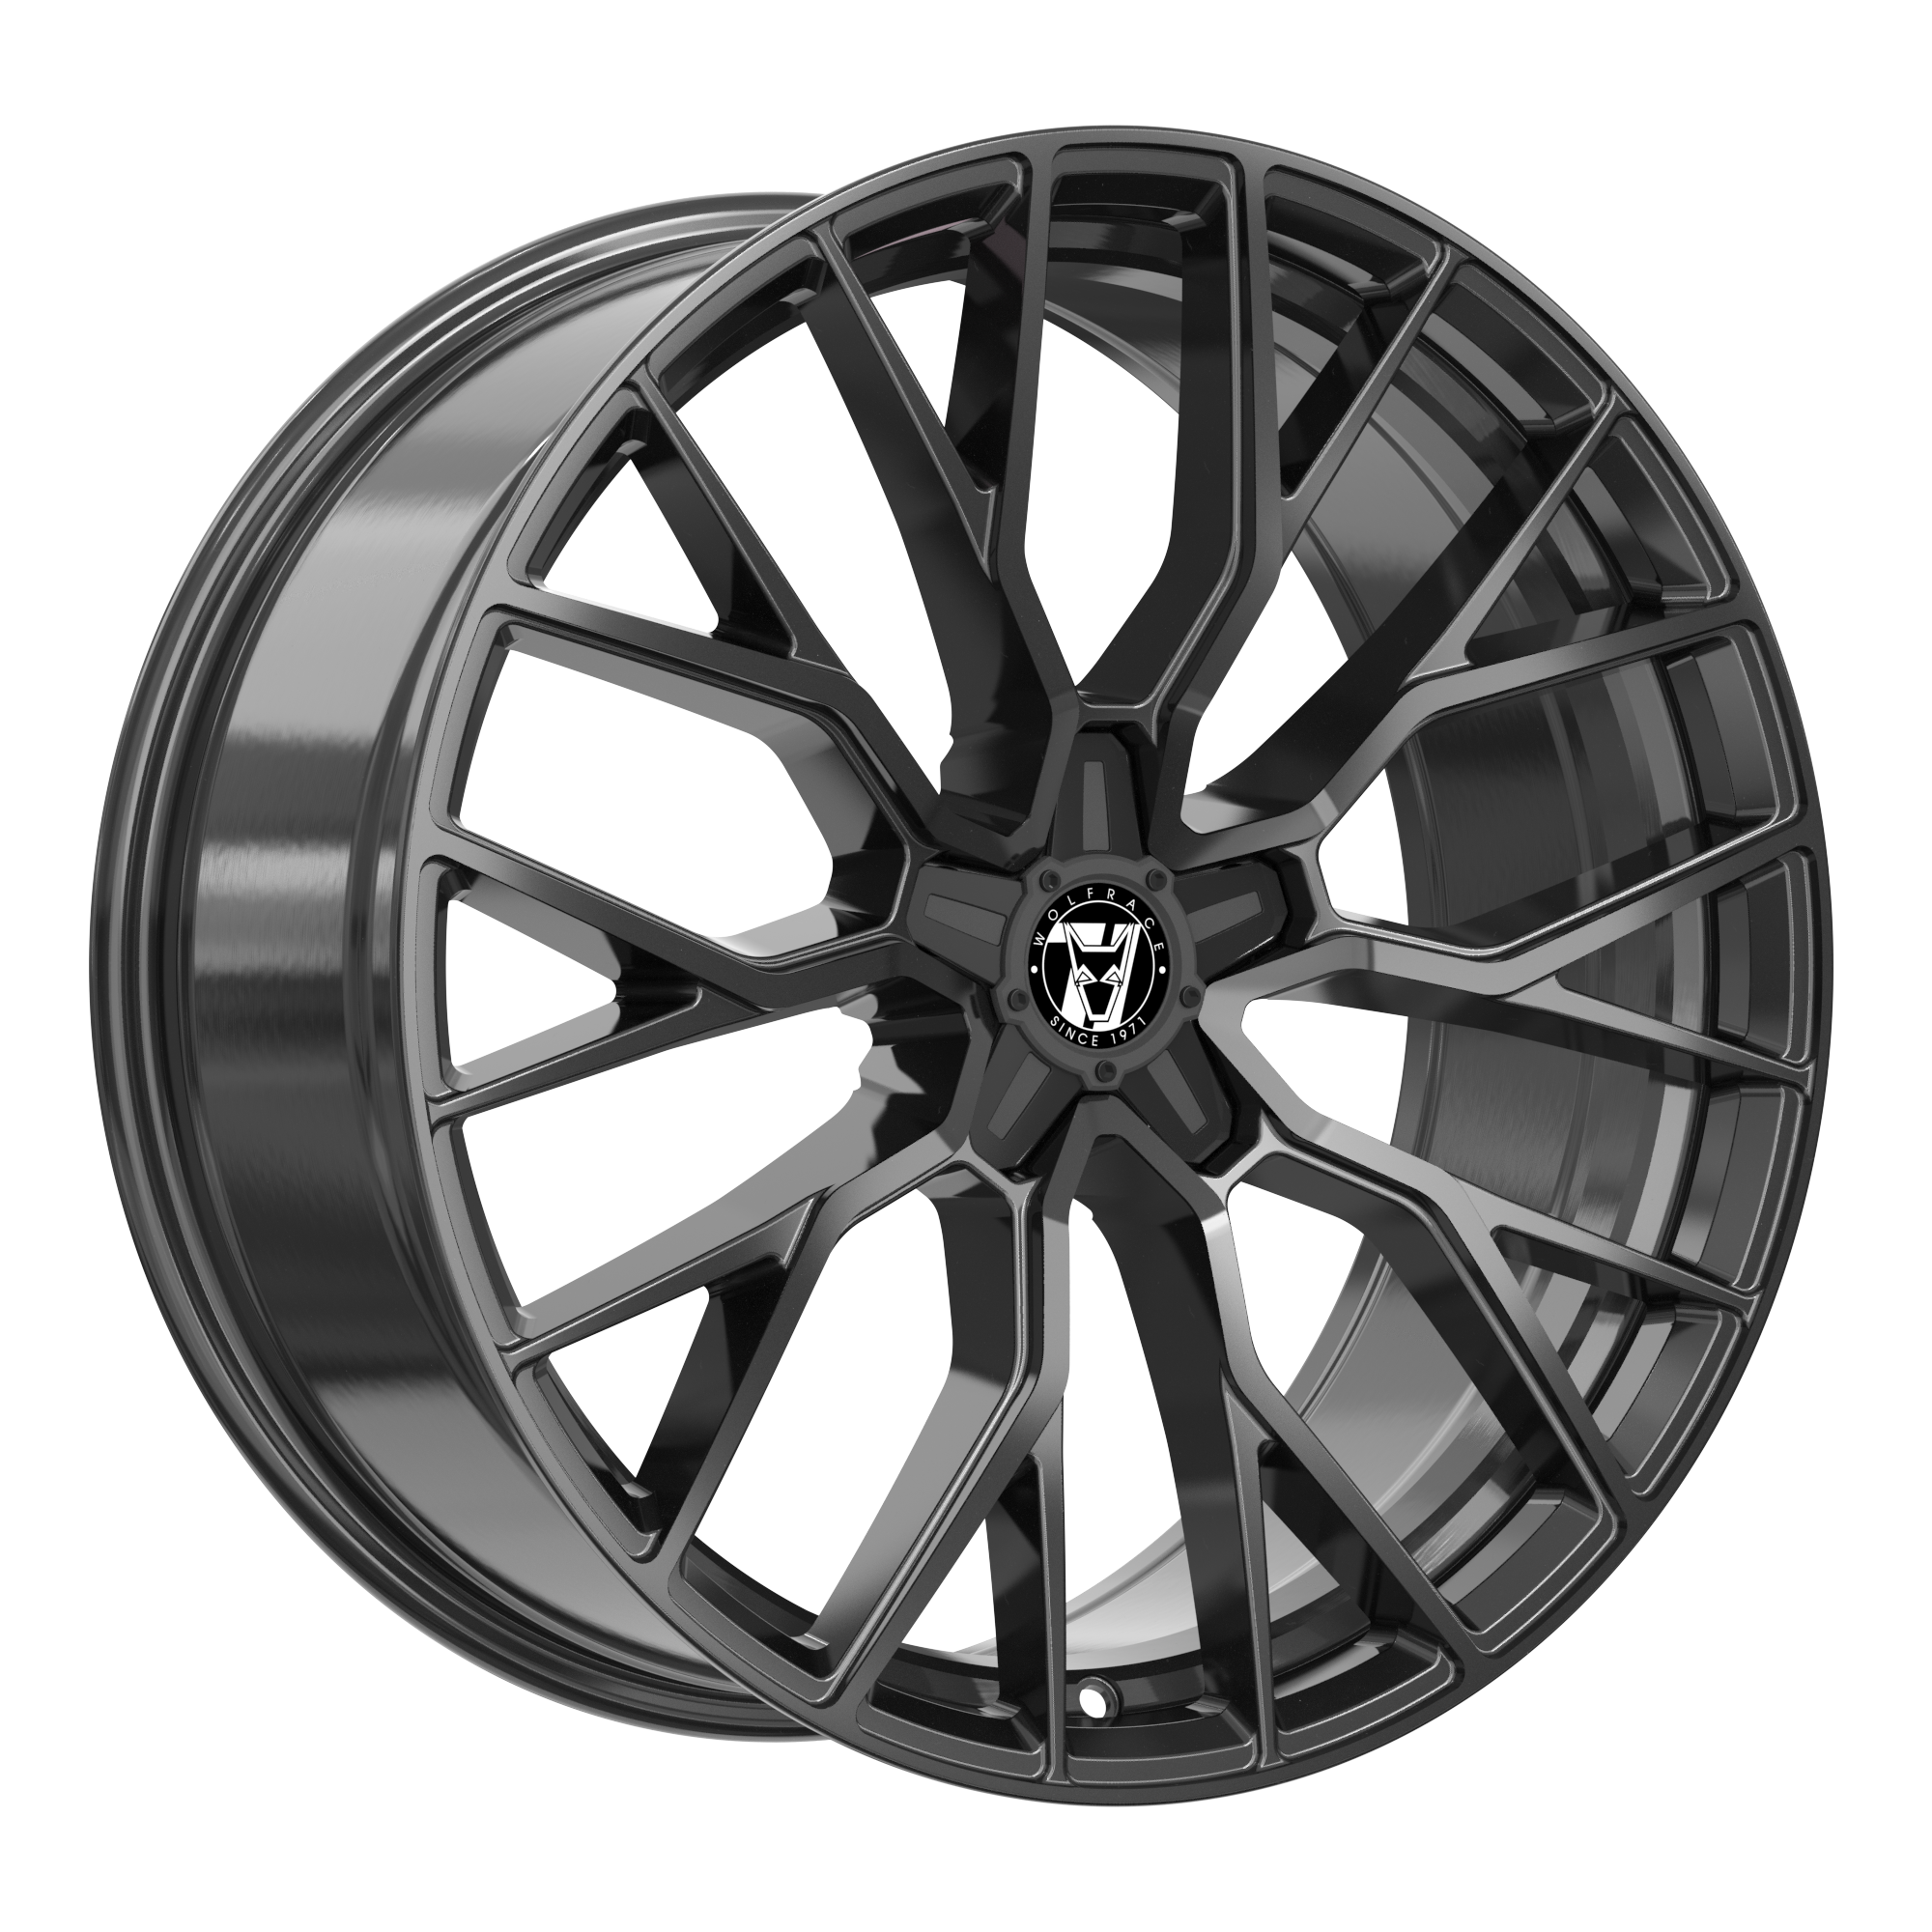 Demon Wheels 71 Munich GTR Black Edition [9.5x22] -5x120- ET 40